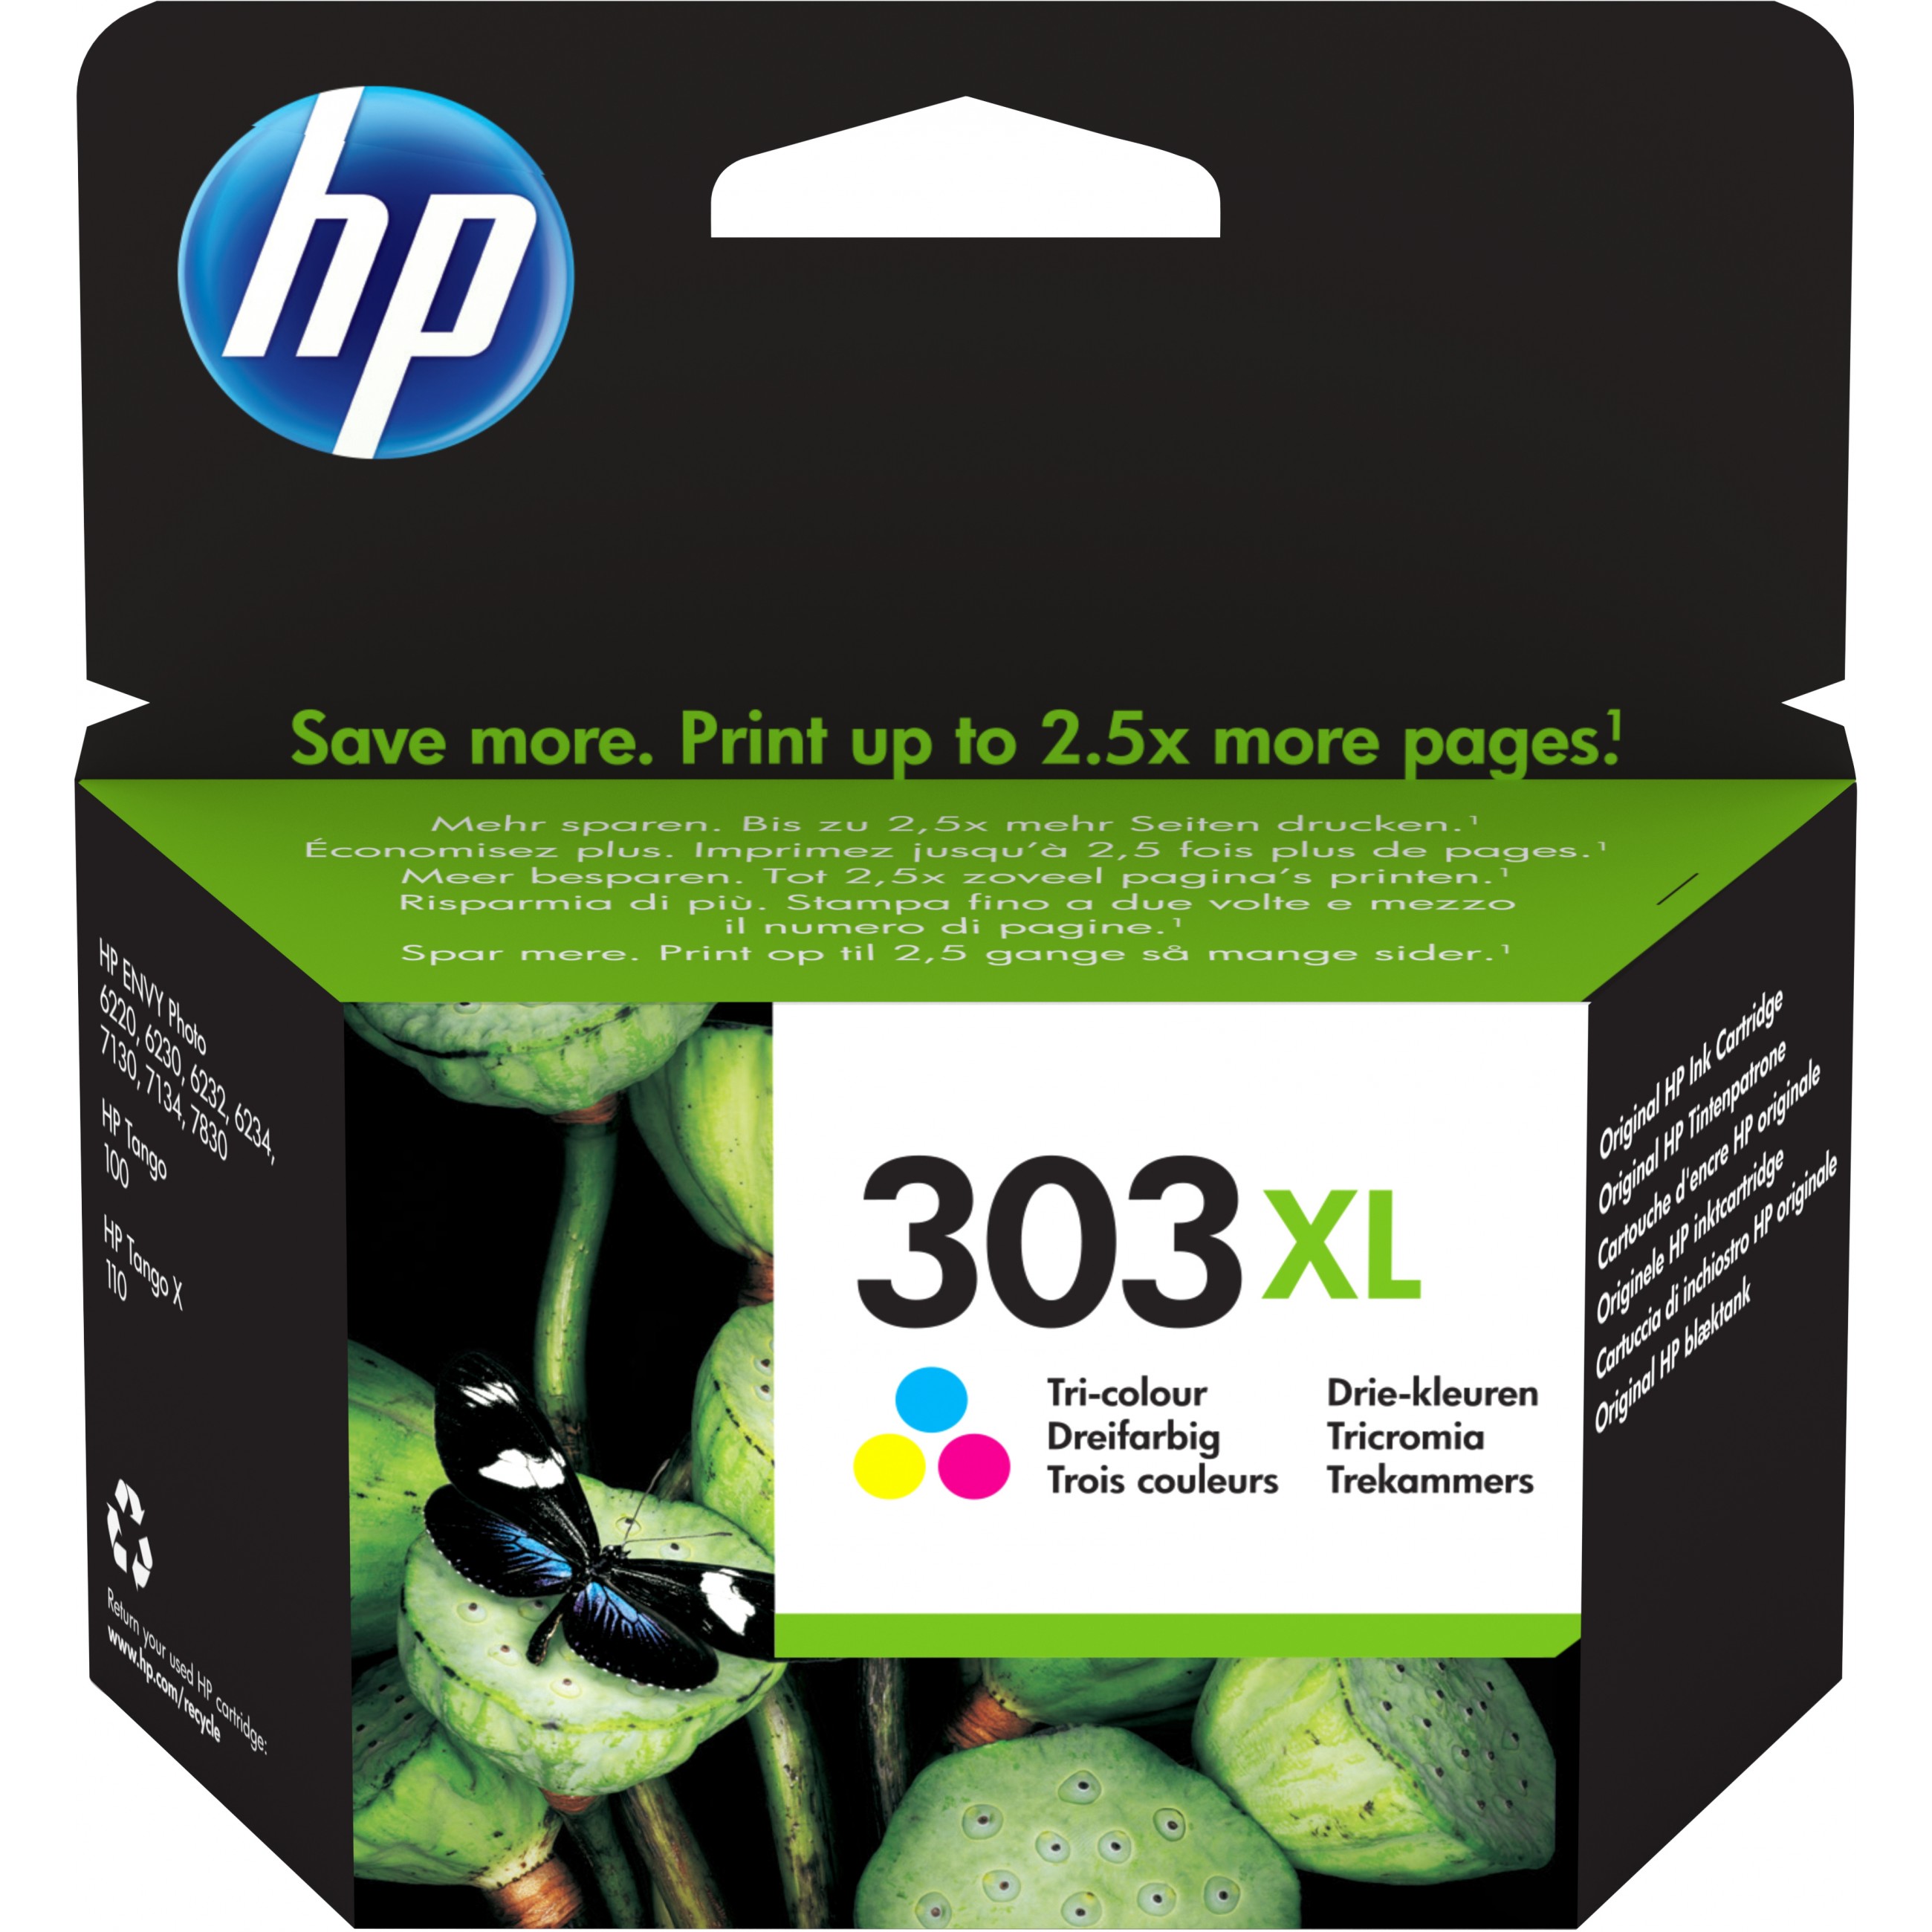 HP 303XL High Yield Tri-color Original ink cartridge - T6N03AE#UUS